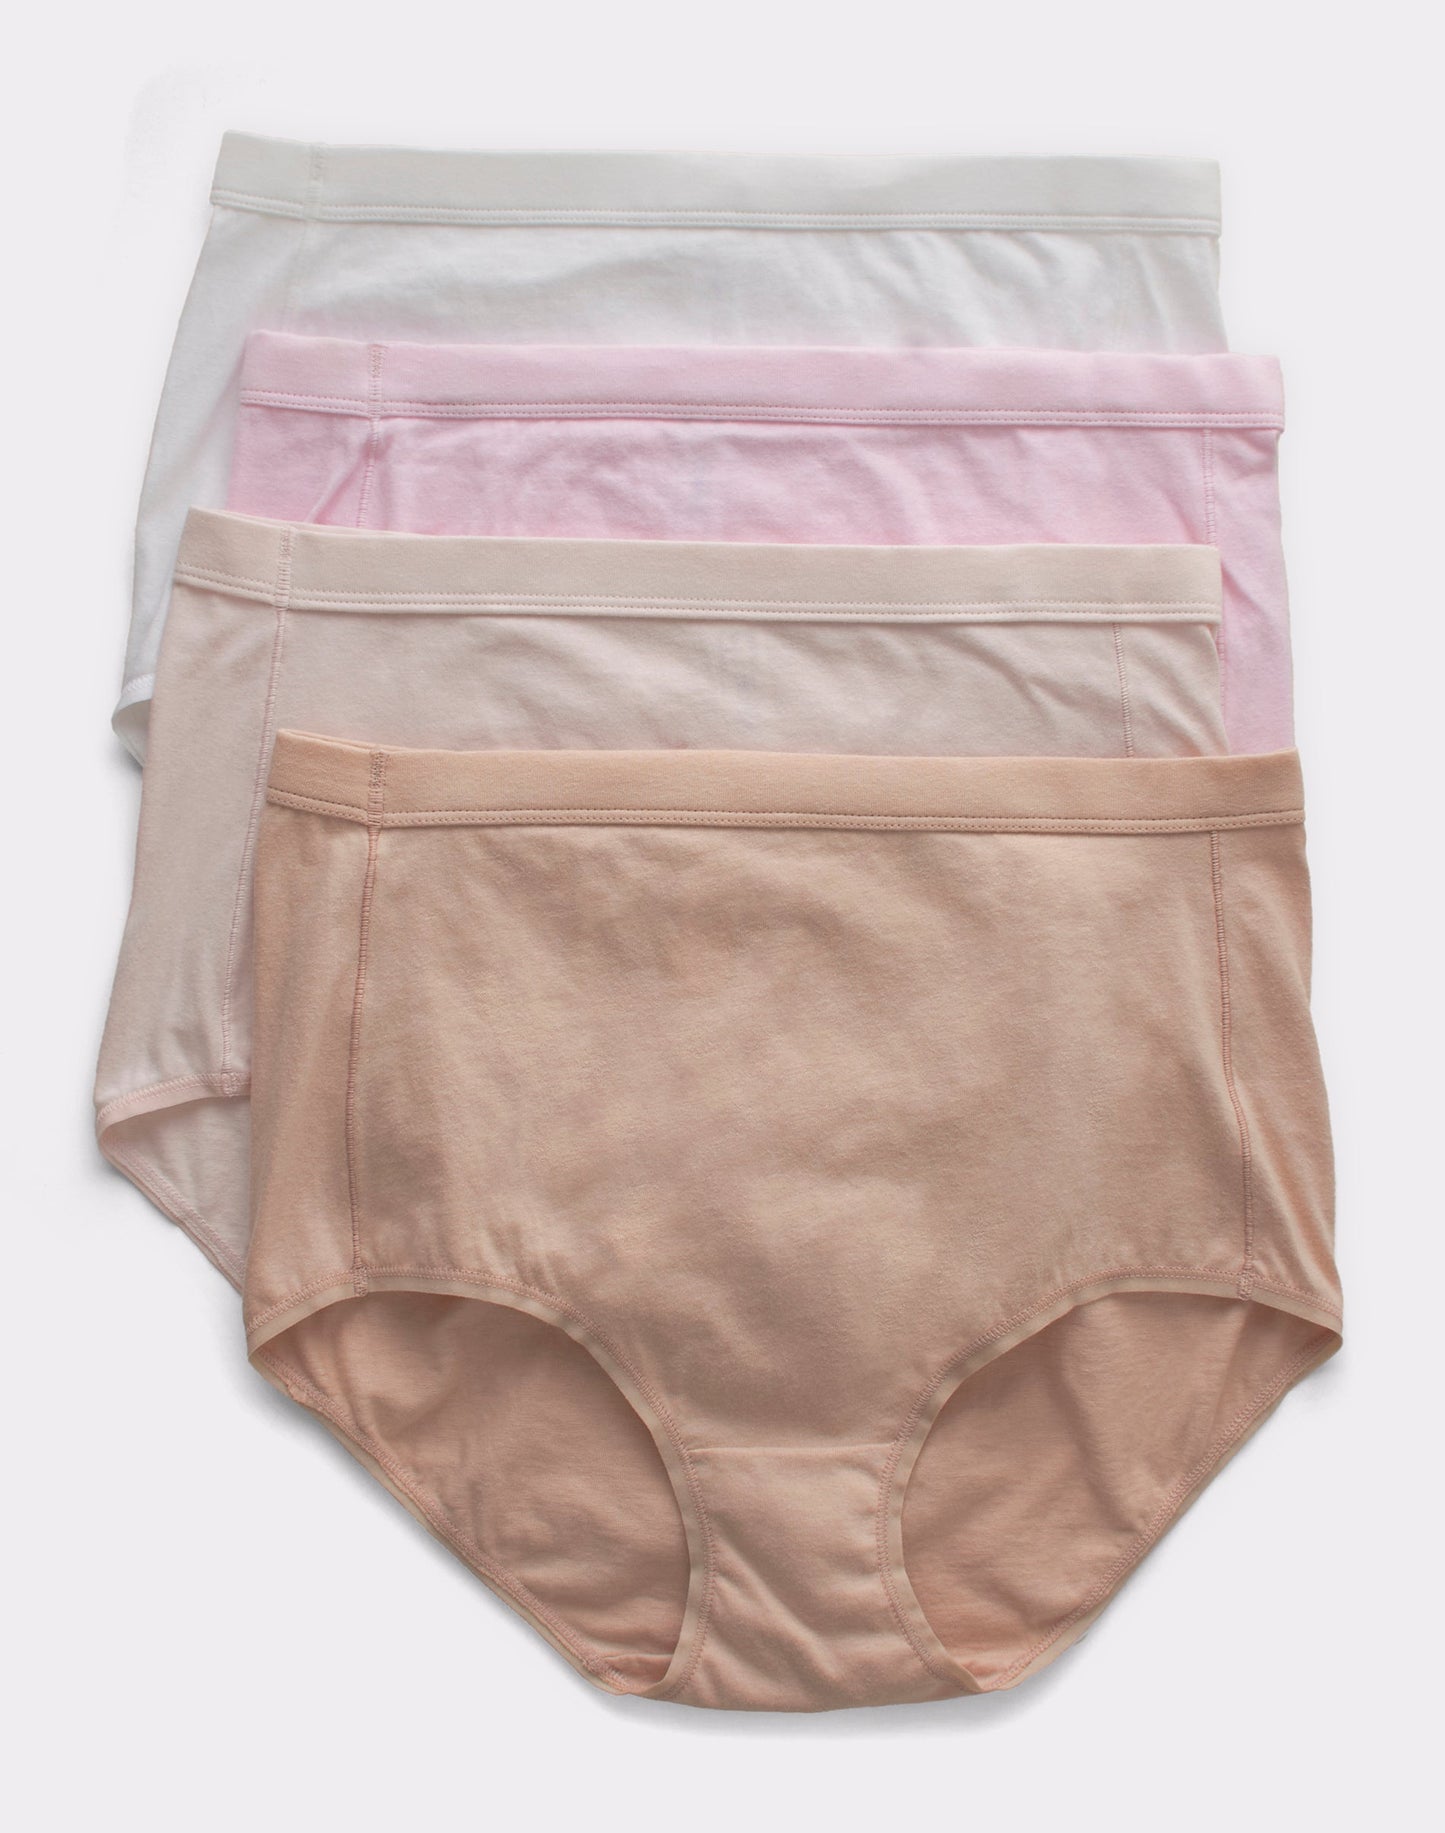 Hanes Ultimate Women's Pure Comfort Organic Cotton Brief 4-Pack White/Ballerina Slipper/Sandshell/Taupe 5